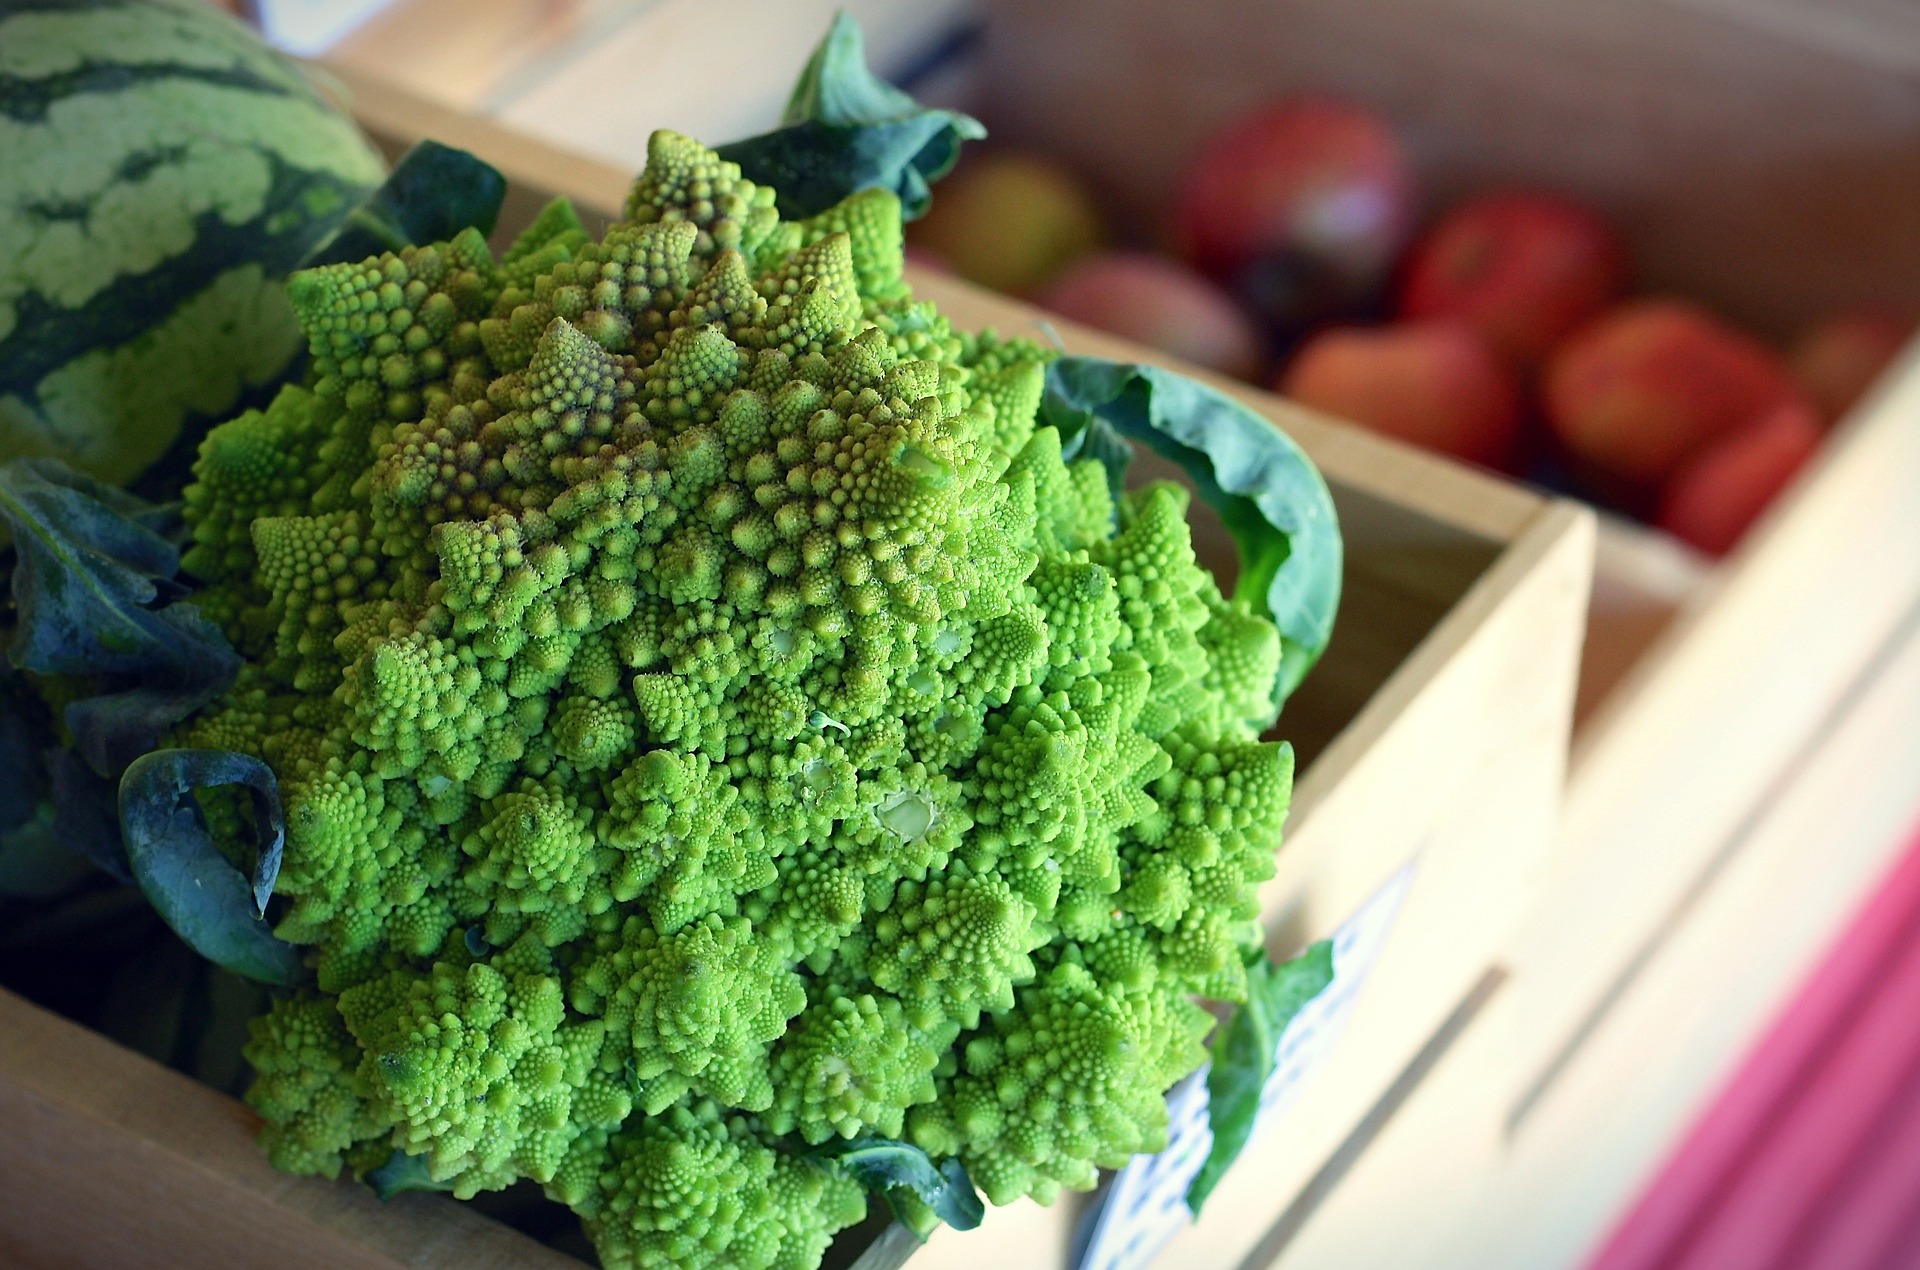 Romanesco broccoli on a wooden cutting board - star of unique veggies blog post